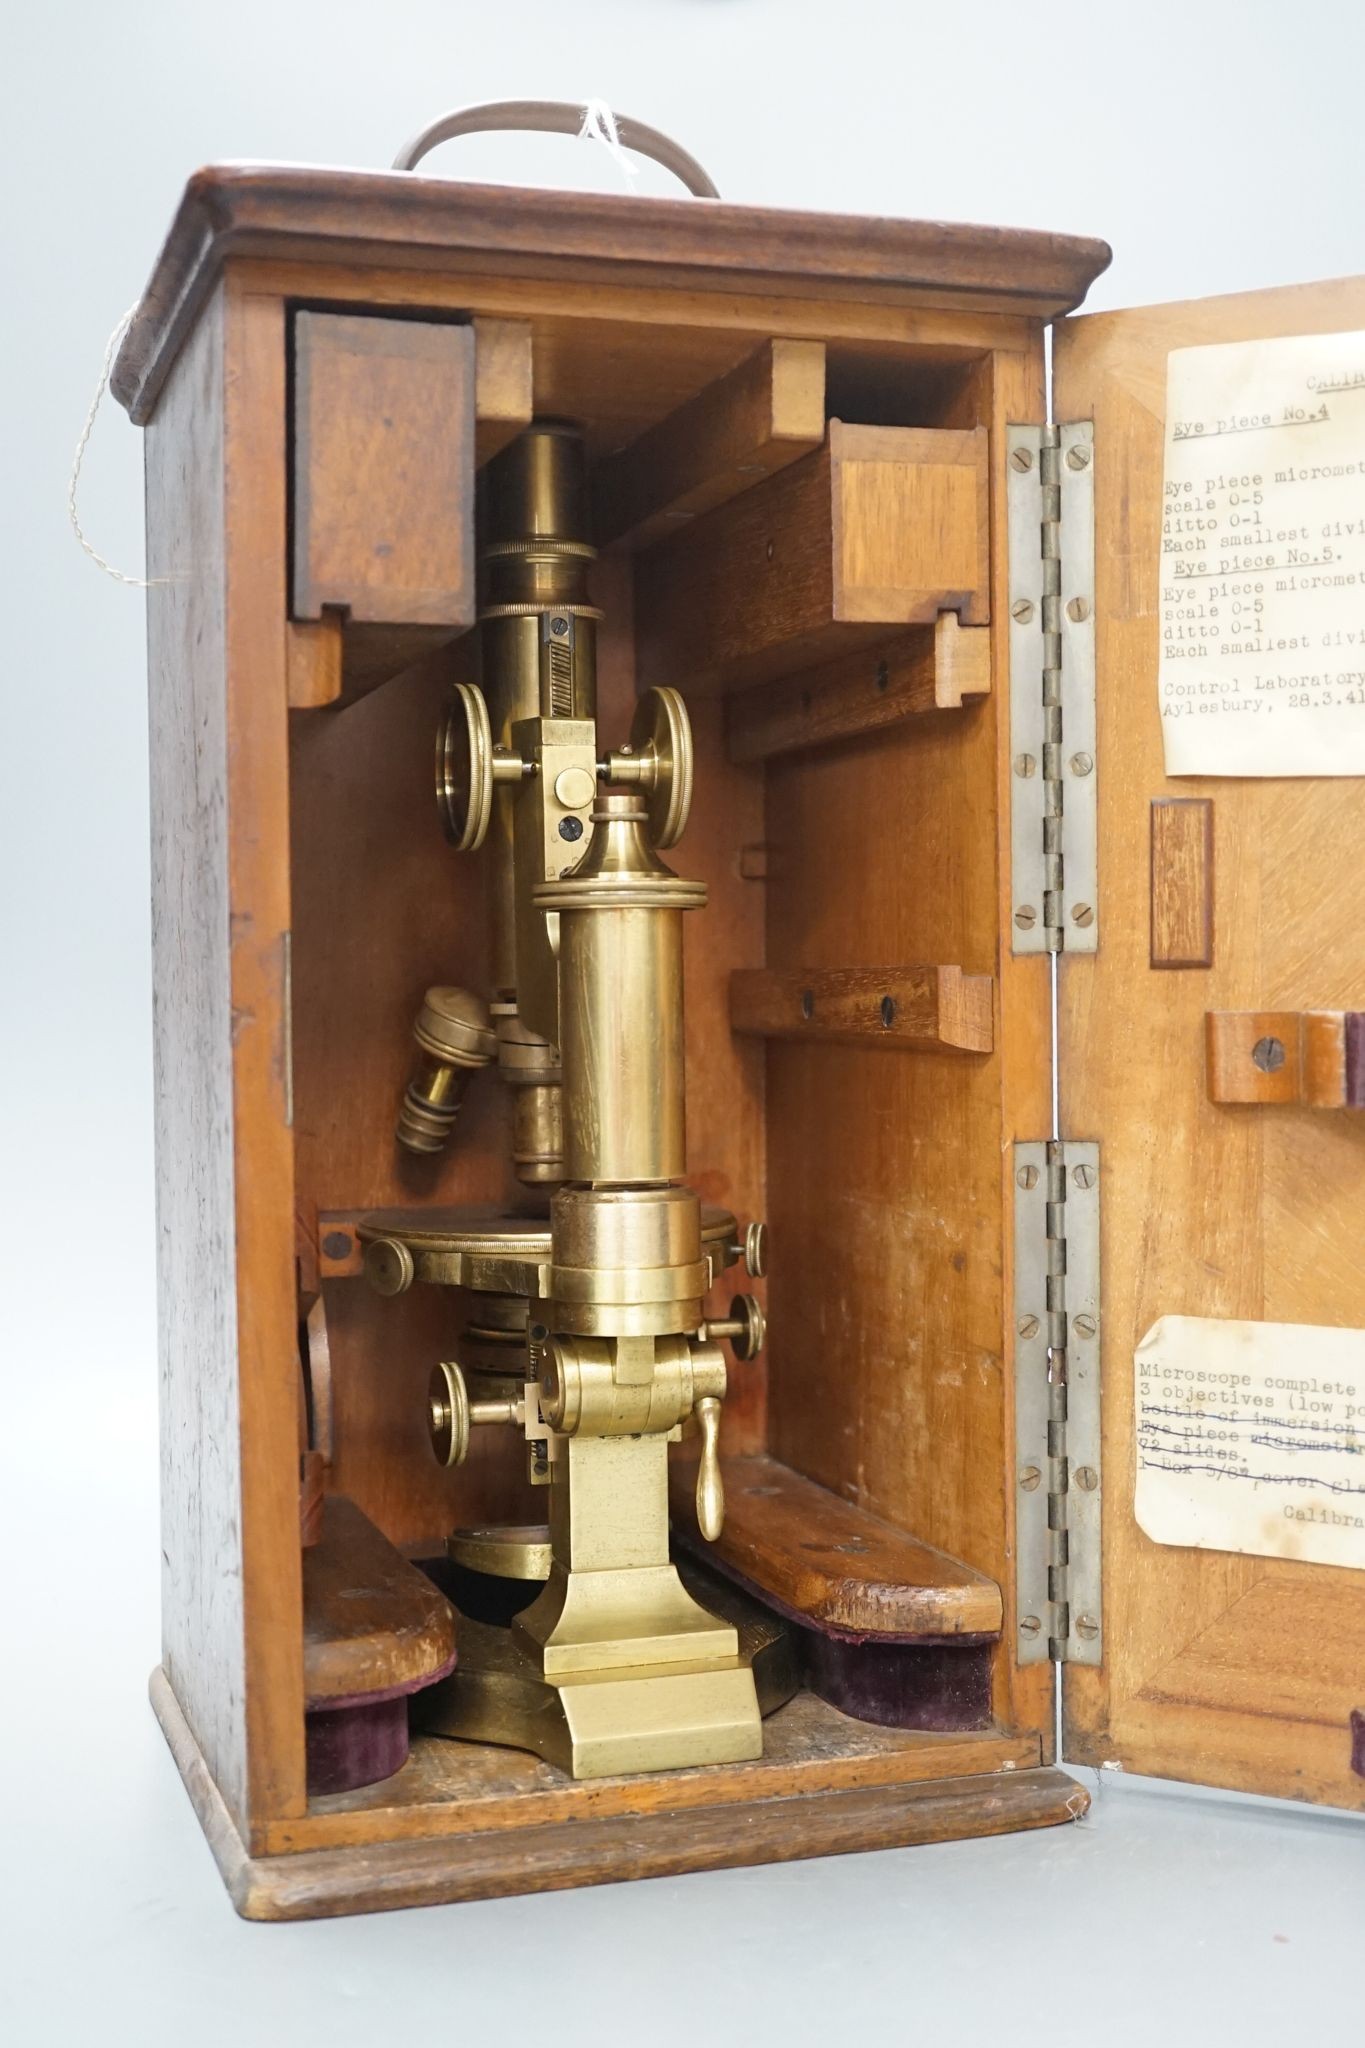 A brass E.Leitz Wetzlar microscope, serial number 28626, in original case